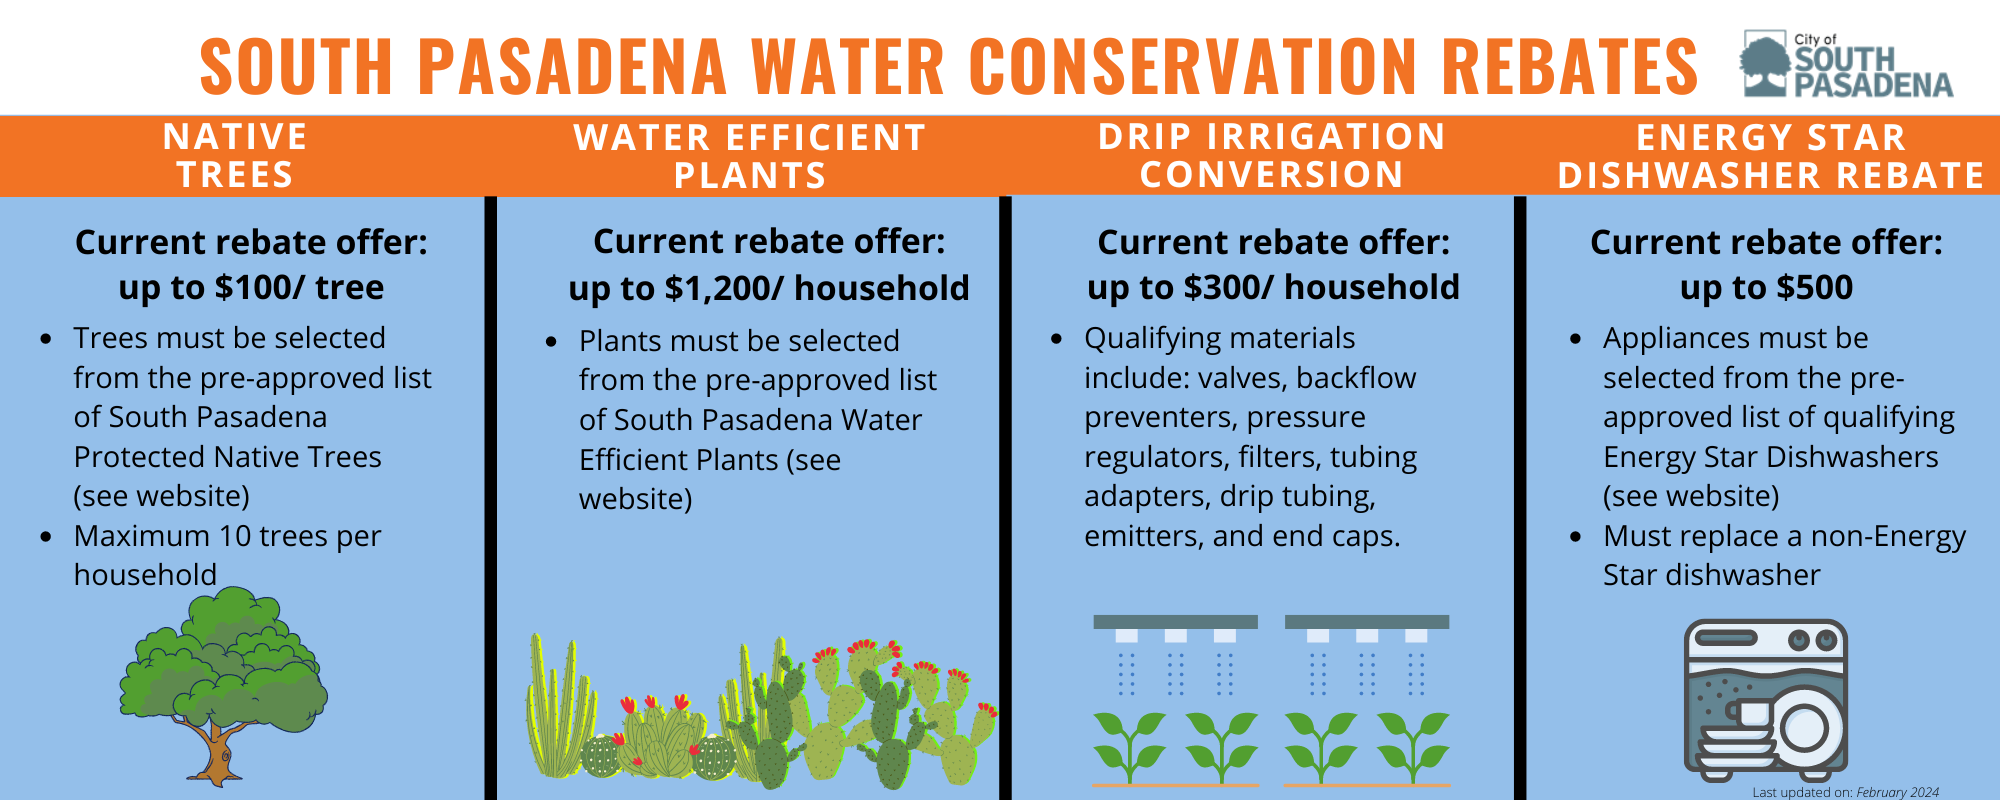 South Pasadena Water Conservation Rebates (2).png